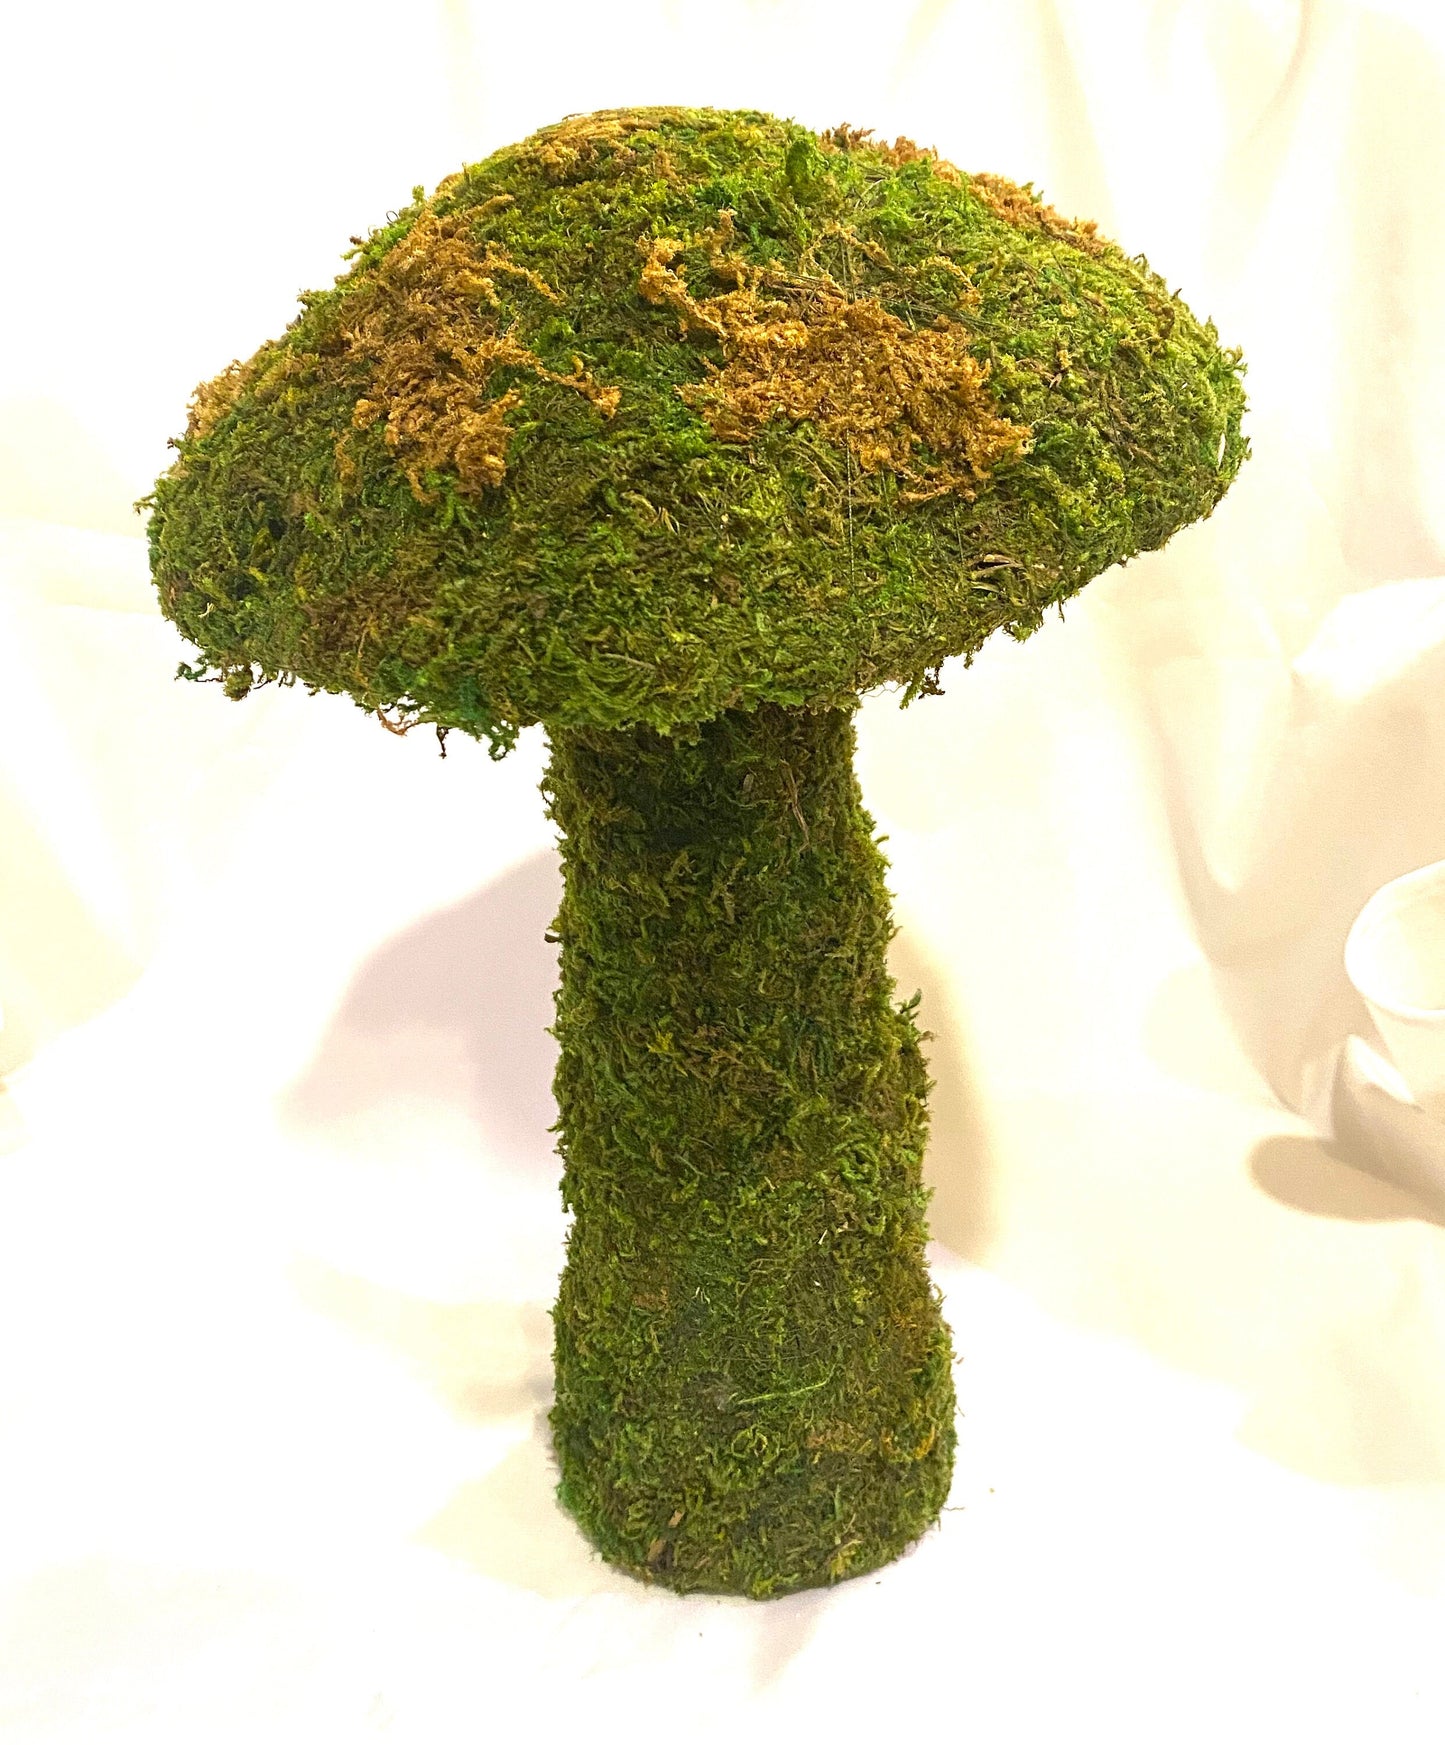 Mushroom deco garden, cute mushroom shape covered with preserved fresh green colored moss